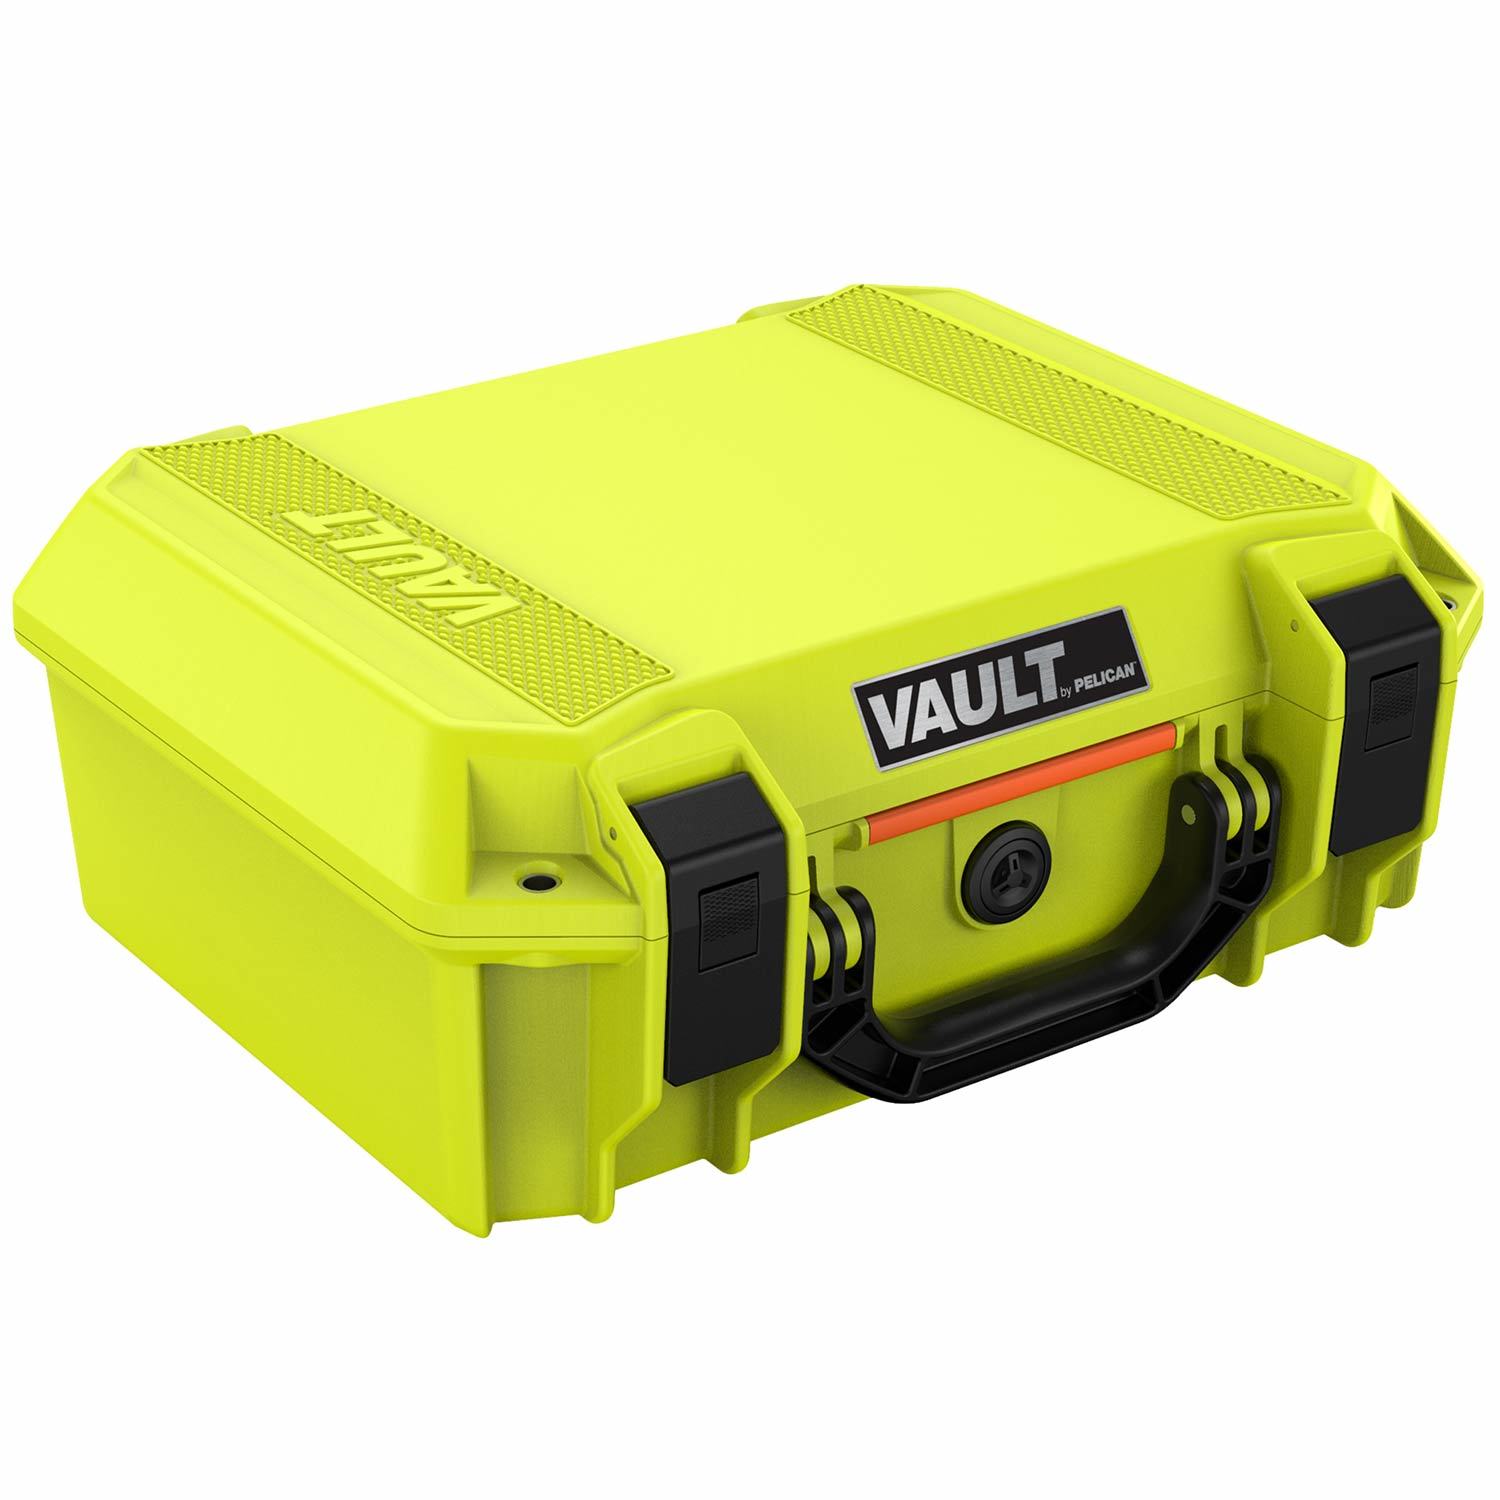 PELICAN PRODUCTS Vault V200 Medium Case with Foam Insert